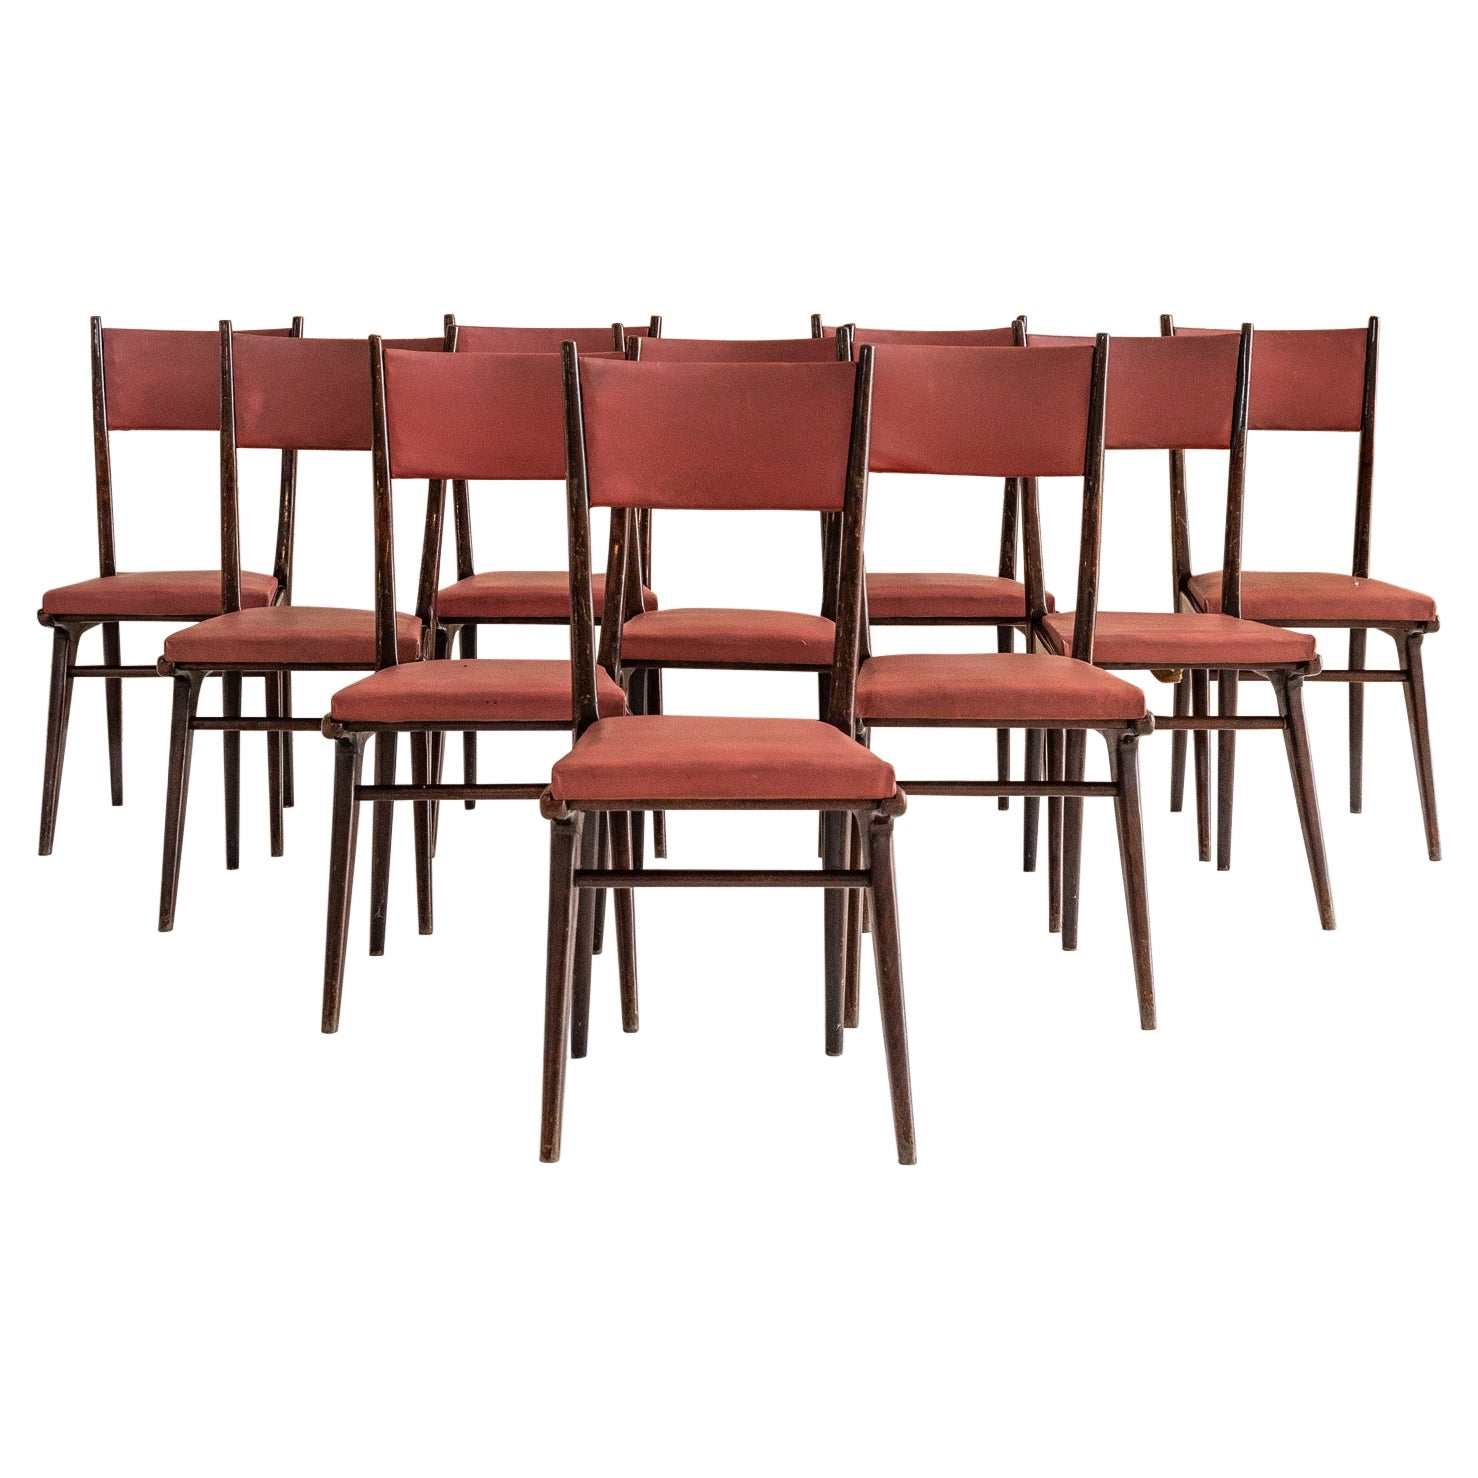 Set of Ten Chairs Mod. 693 Attributed to Carlo de Carli